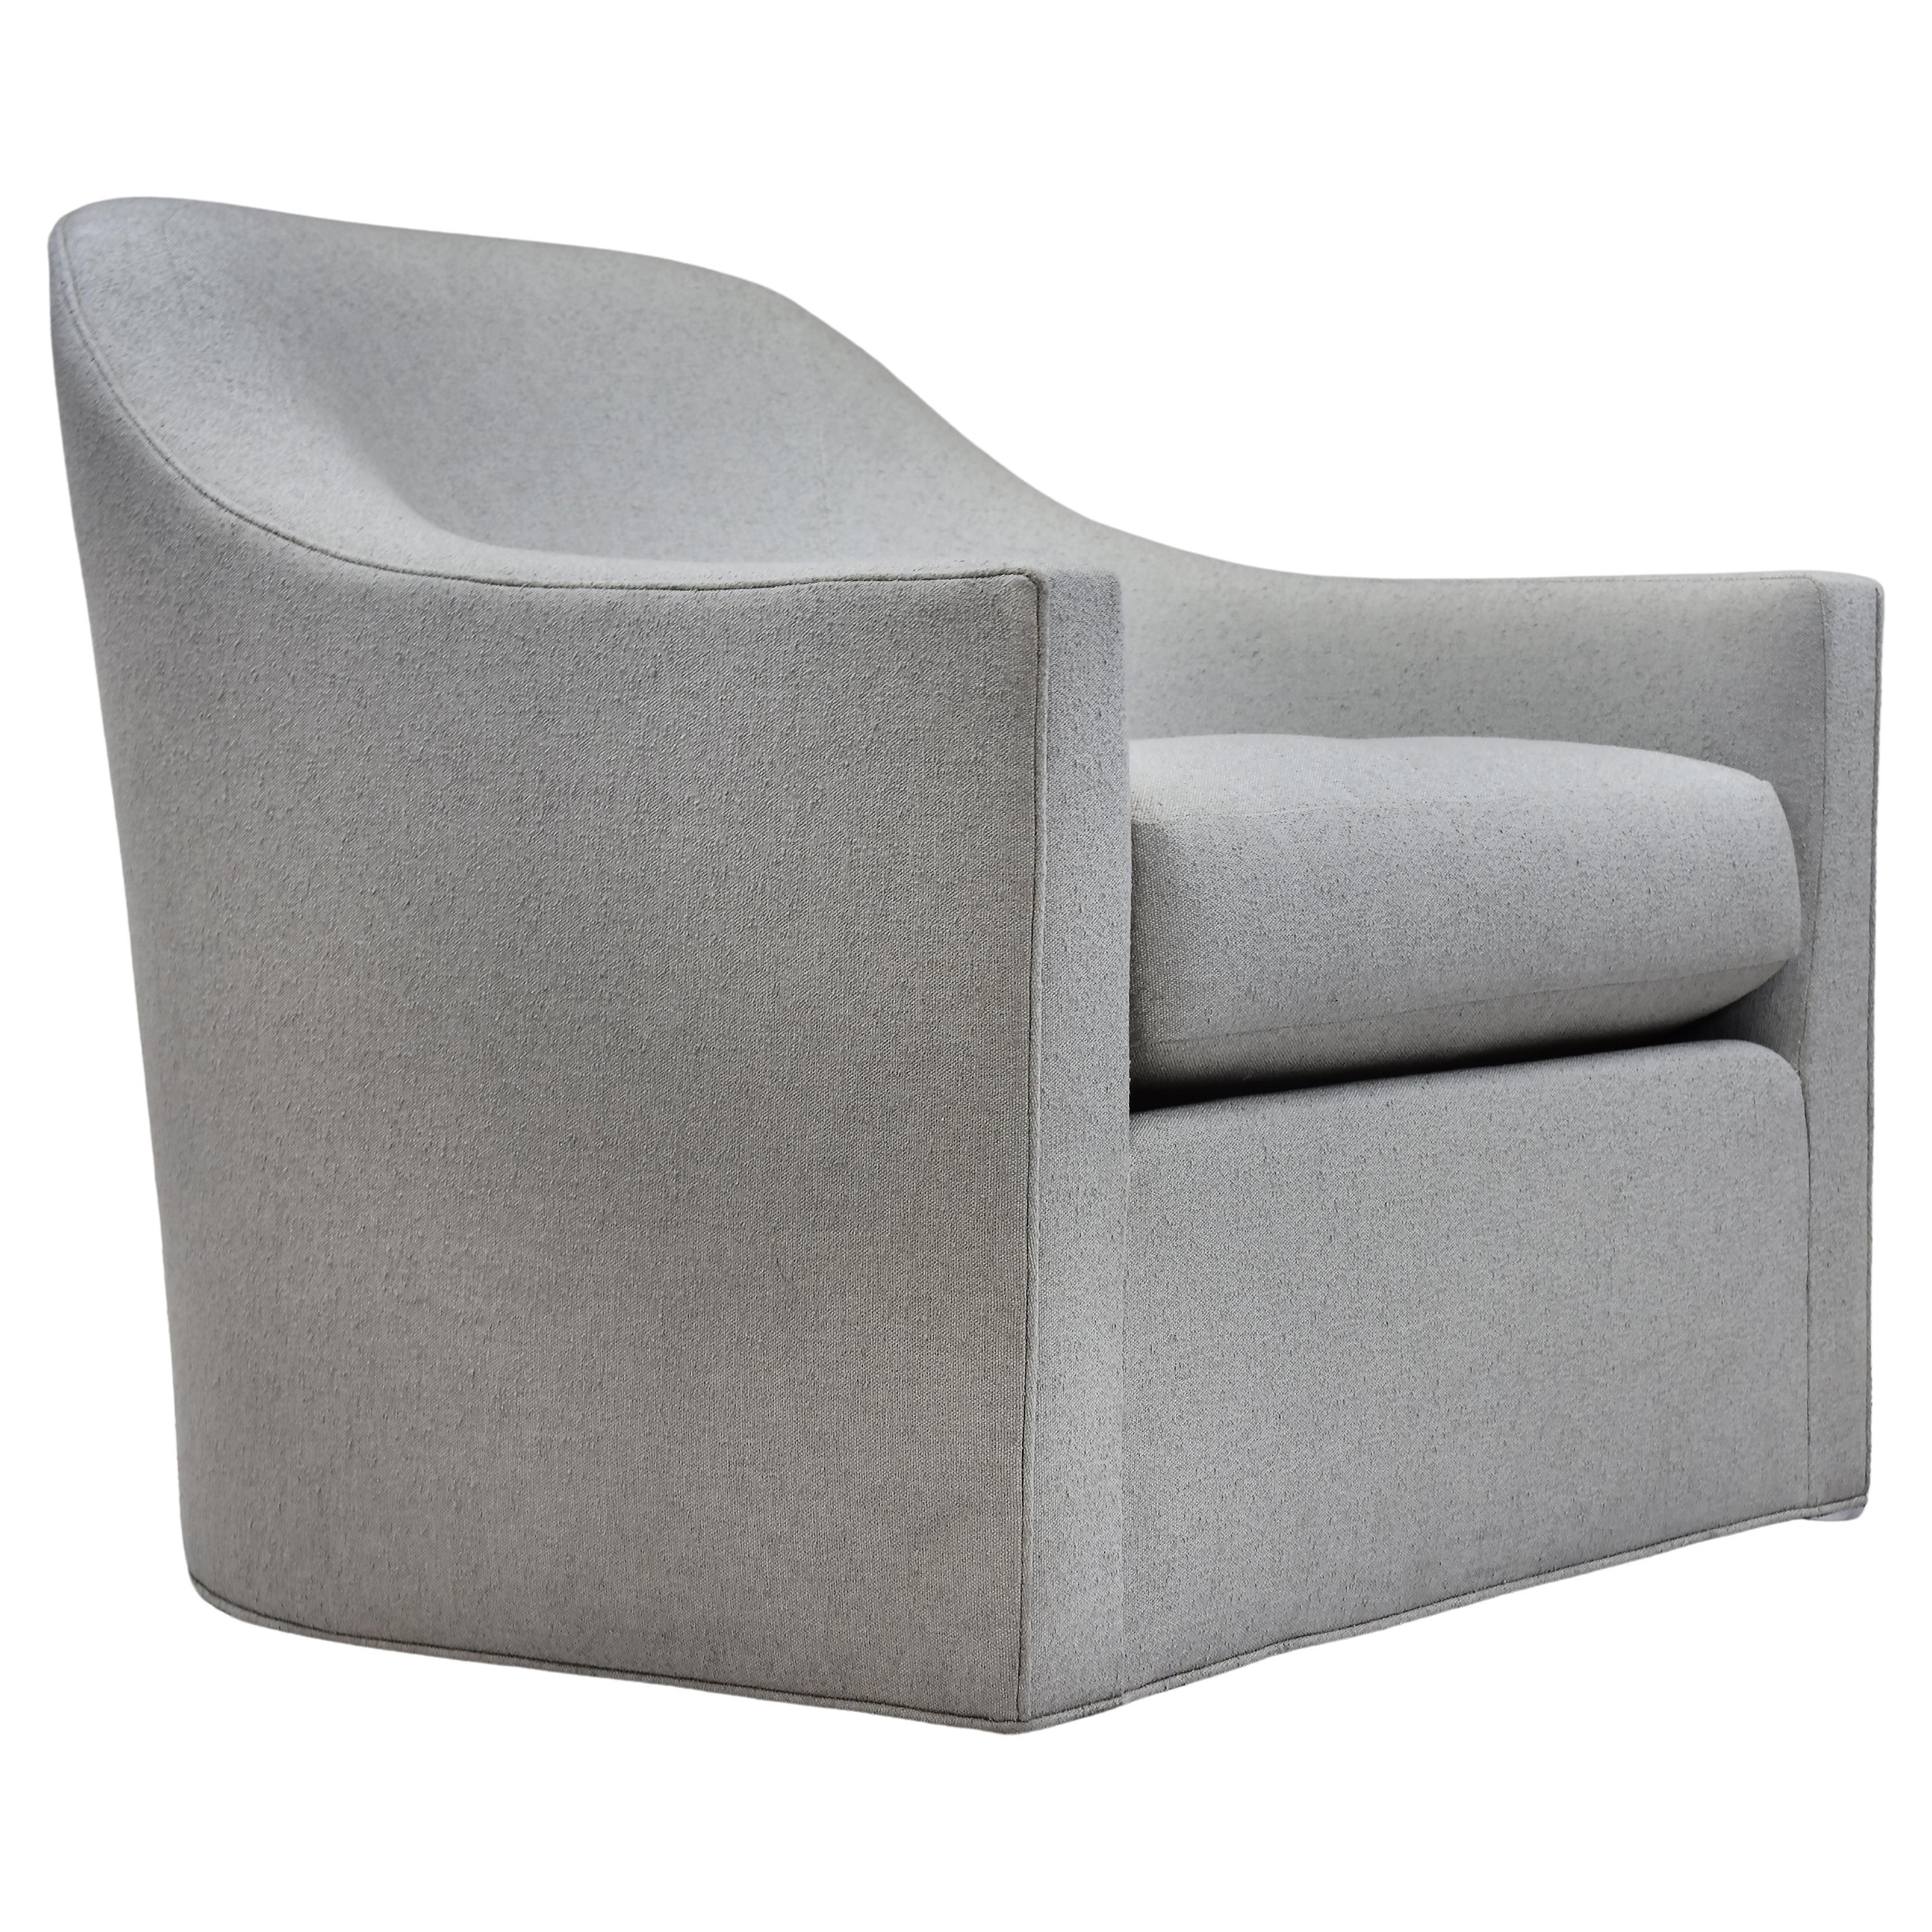 Le Jeune Upholstery Coach Barrel Chair Showroom Model